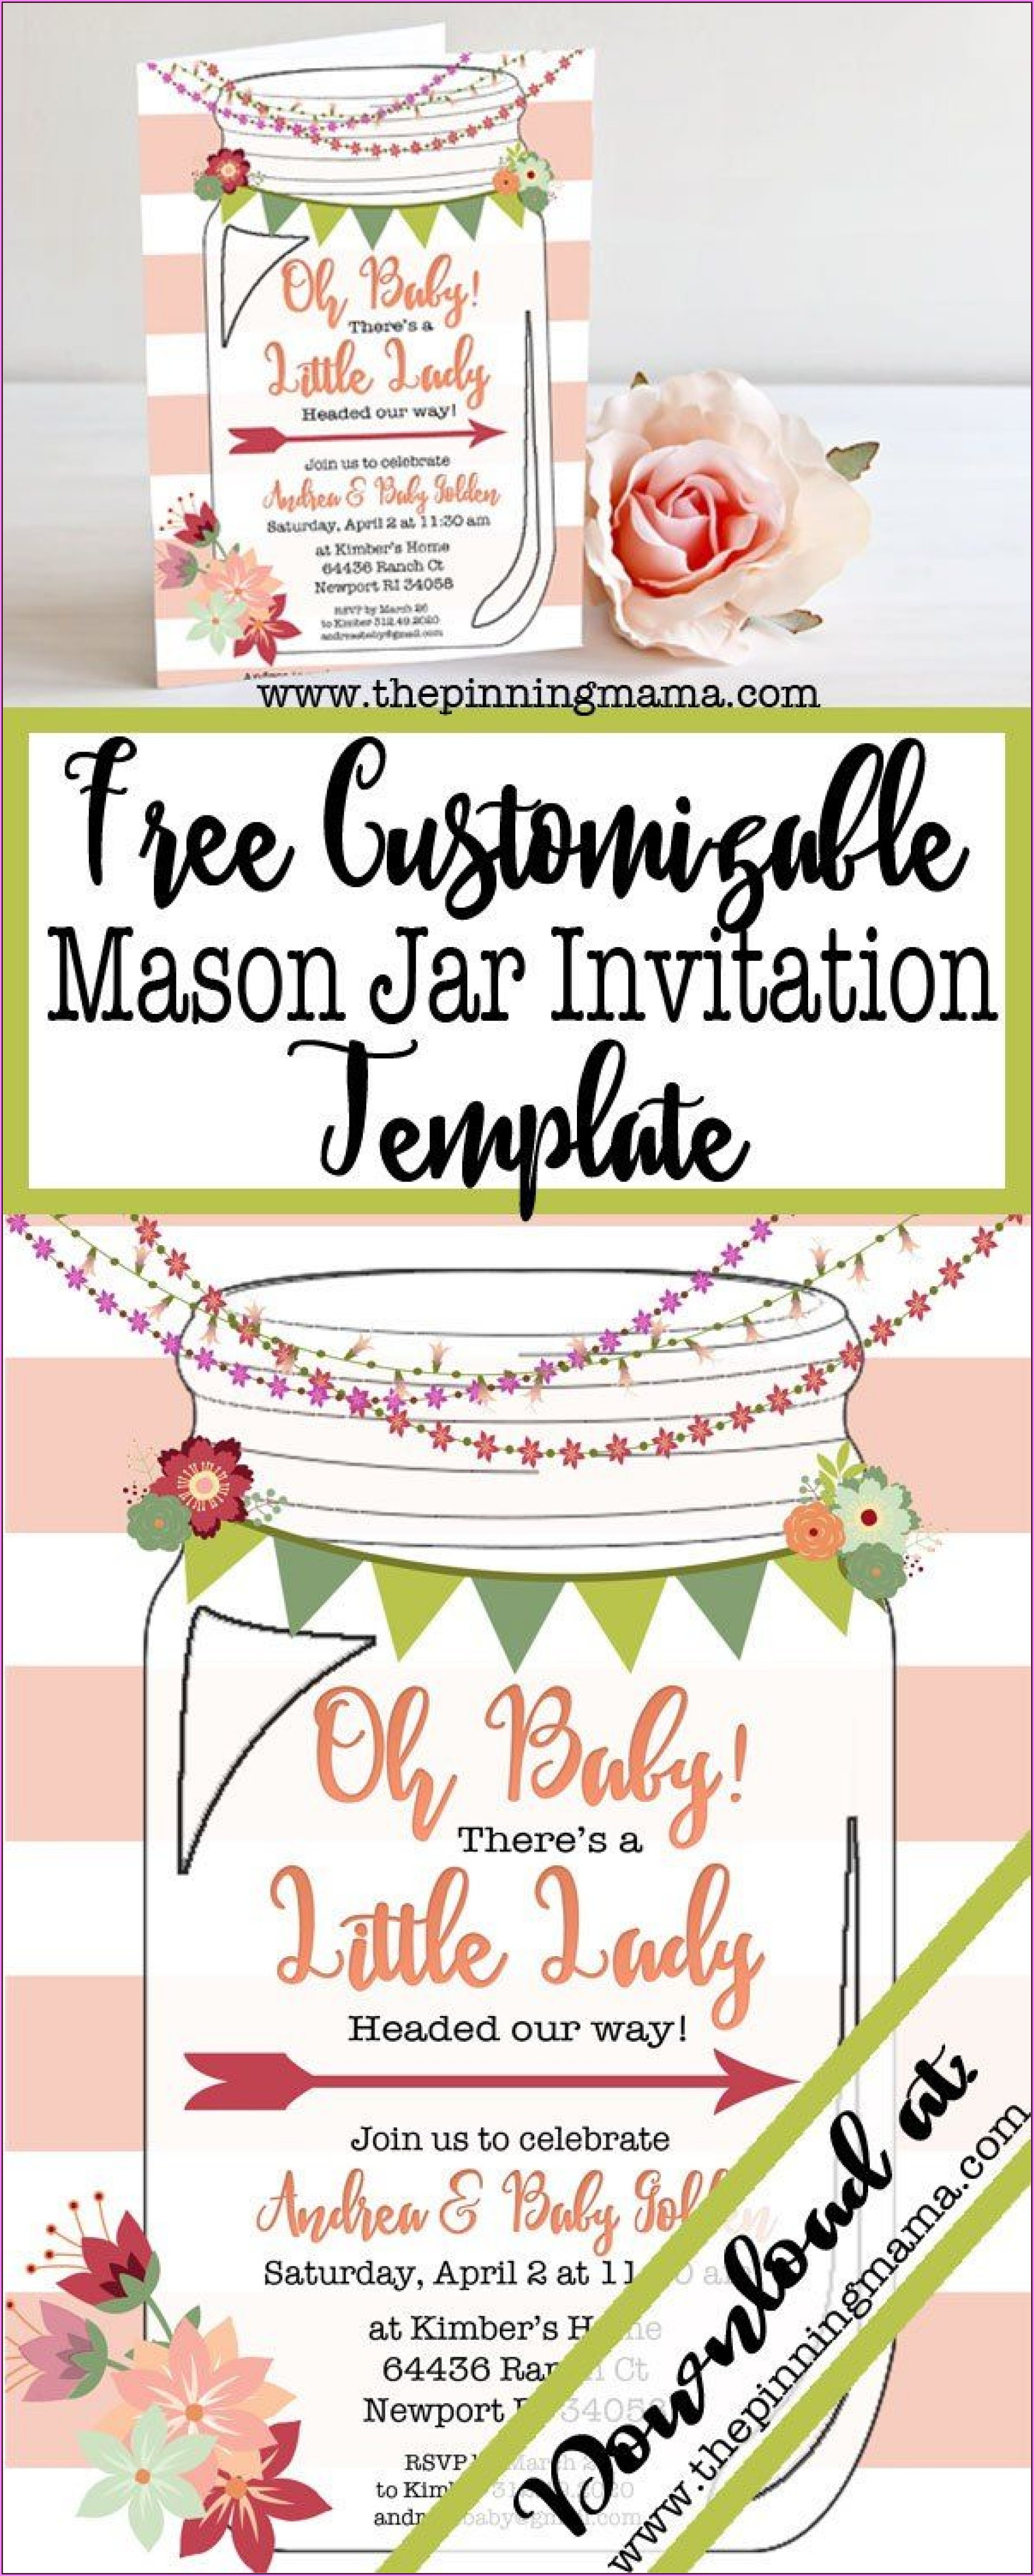 Mason Jar Invitation Template Free